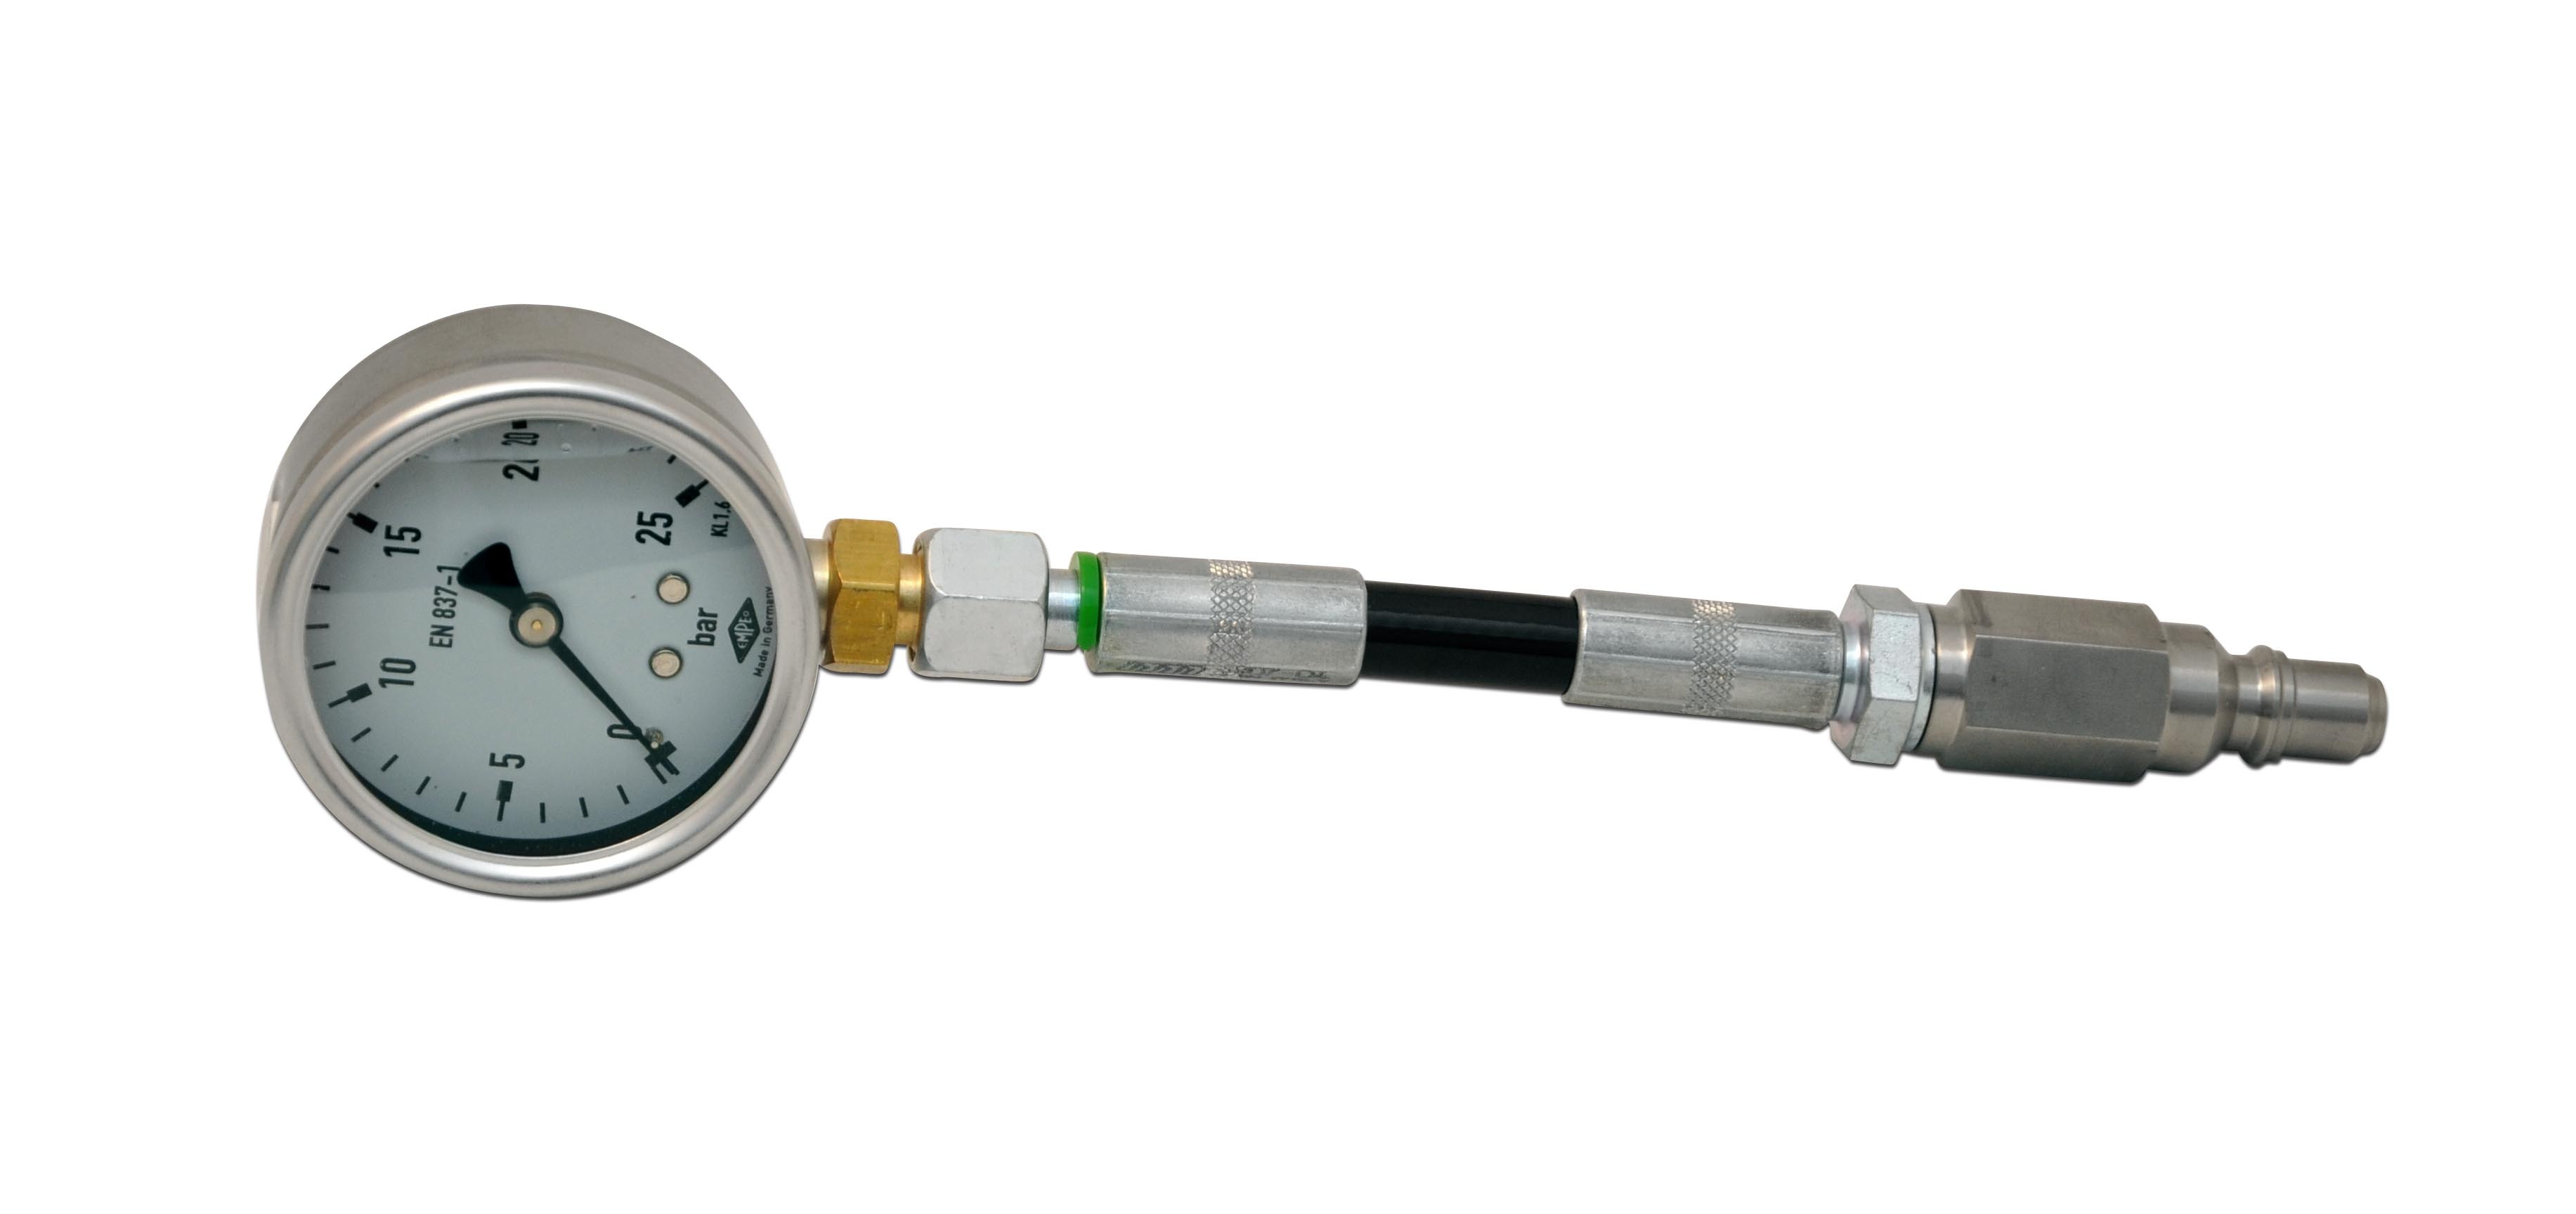 Pressure gauge 0 to 25 bar - class 1,6 for test head HEINZ
diameter 63 mm, glycerin filled